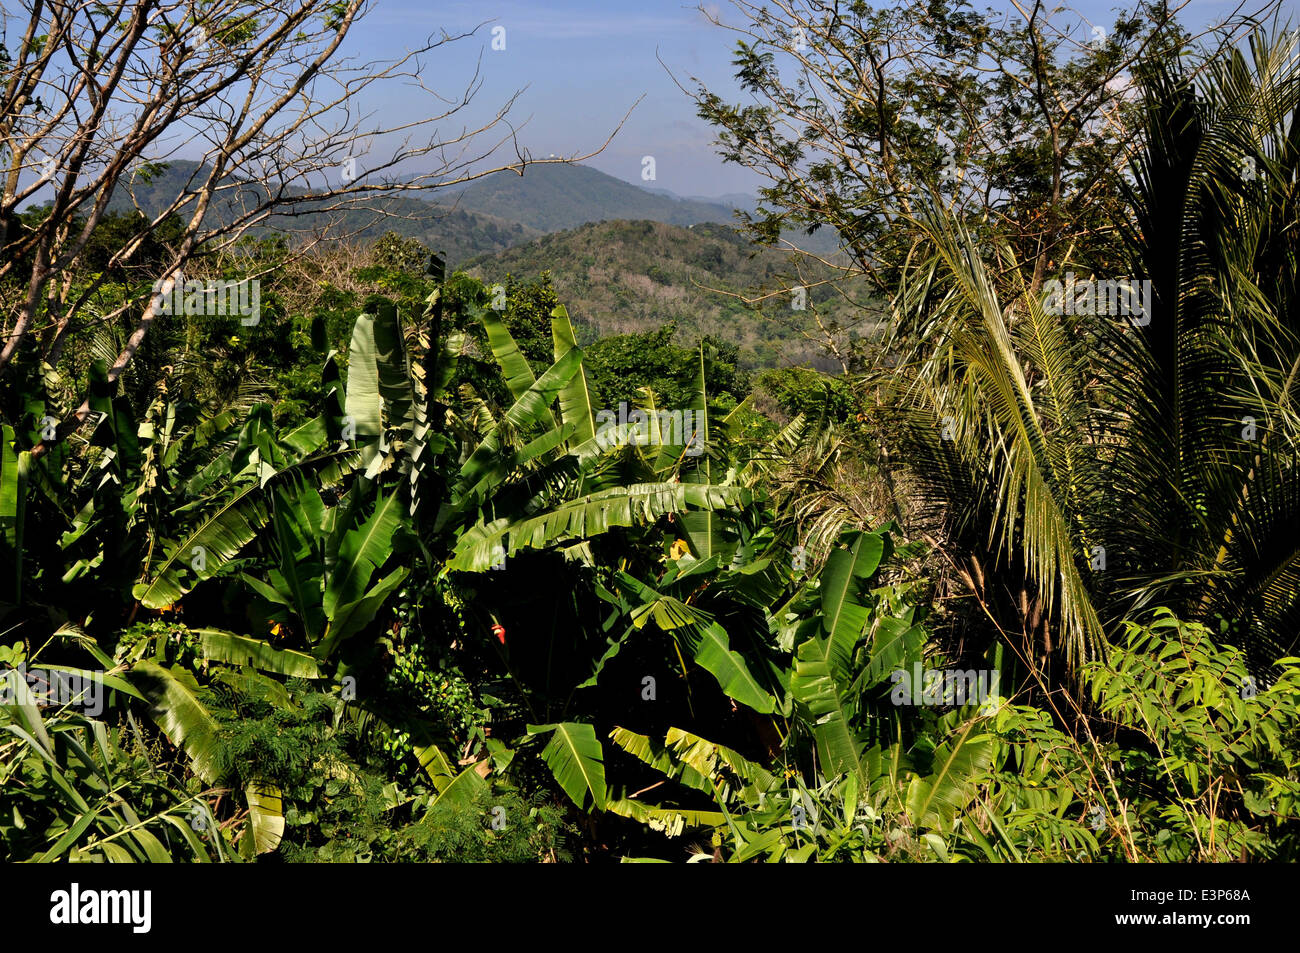 Phuket Island, Thailand: Lush tropical vegetation including banana trees (center) and palms on Big Buddha Hill Stock Photo